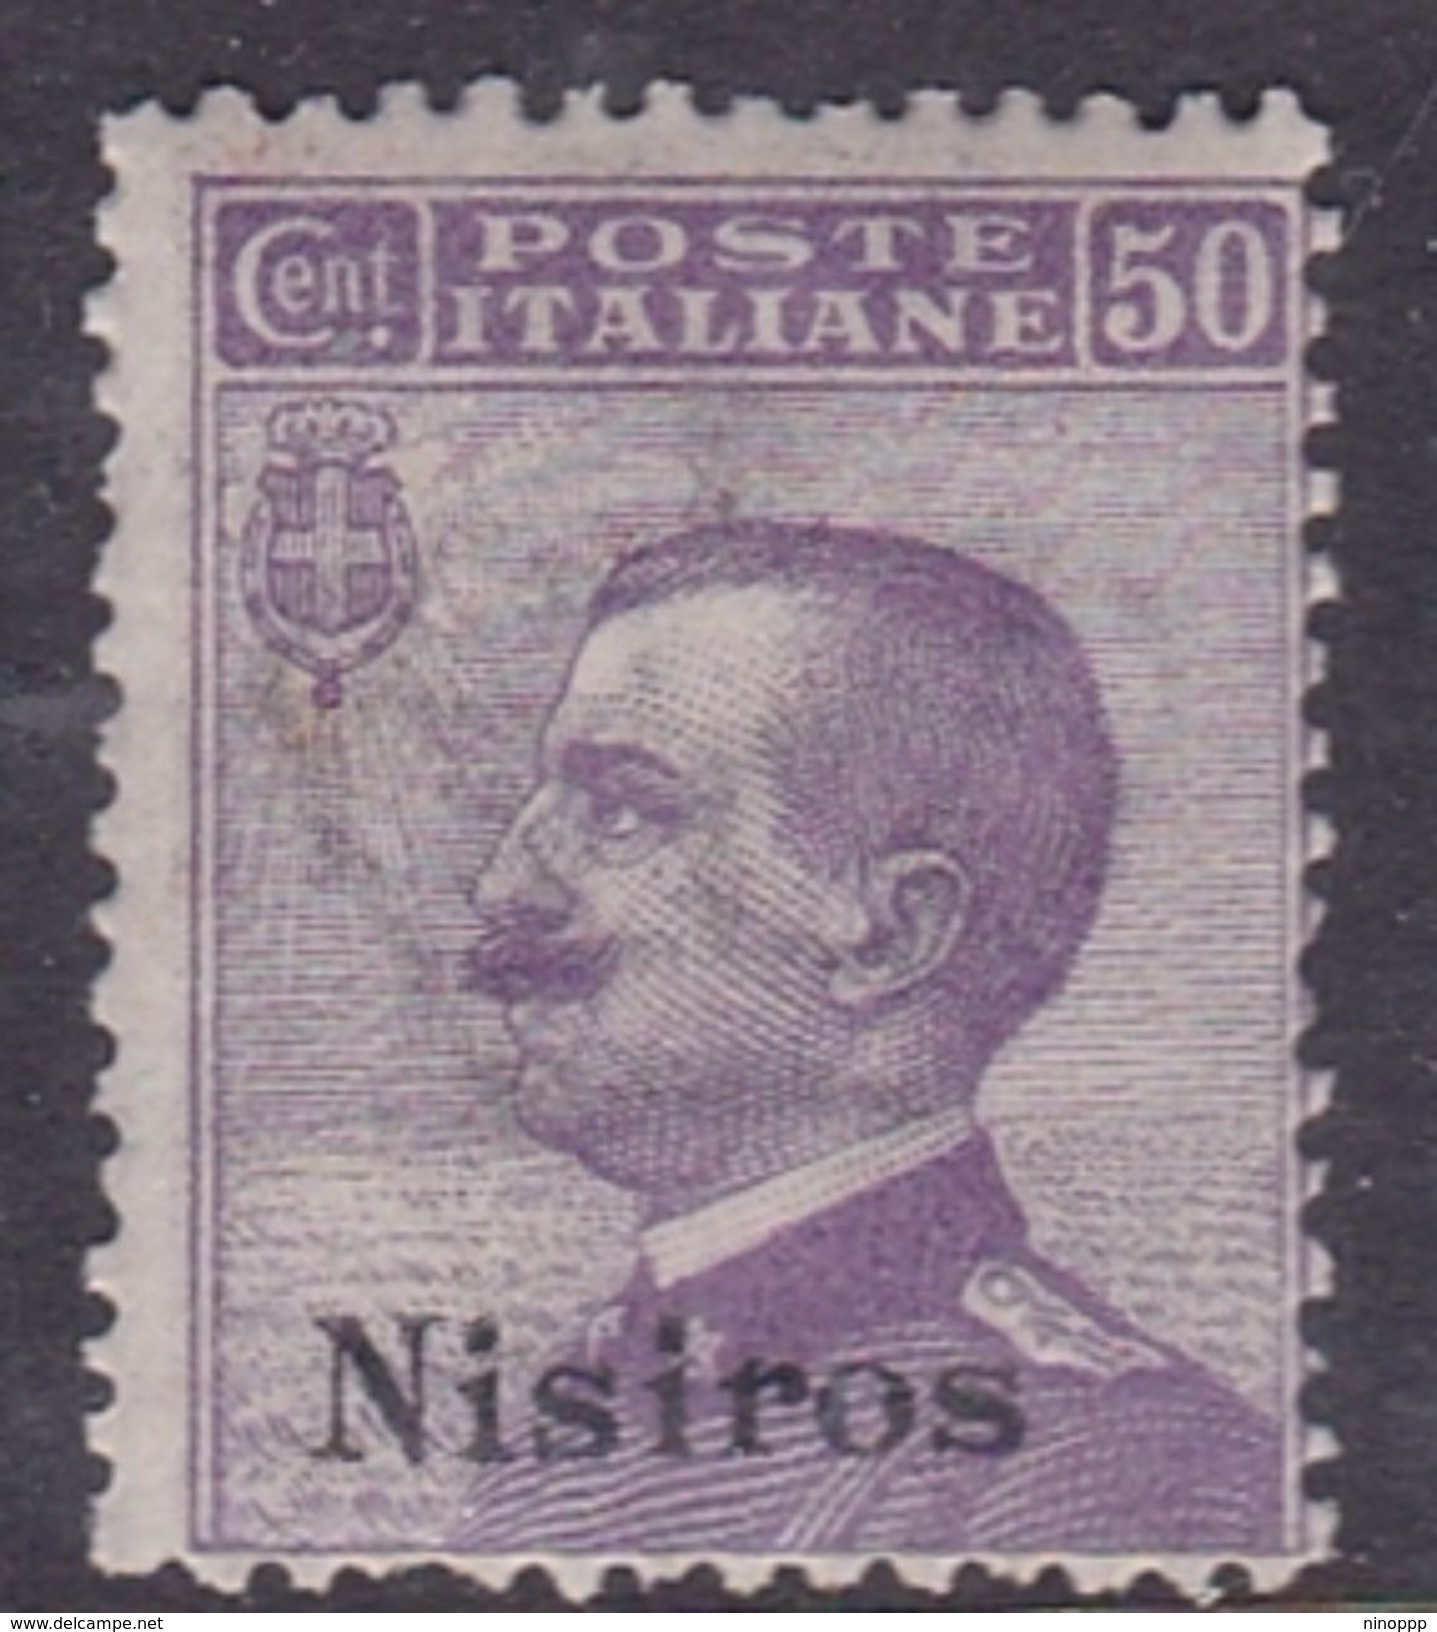 Italy-Colonies And Territories-Aegean-Nisiro S 7  1912 50c Violet MNH - Aegean (Nisiro)